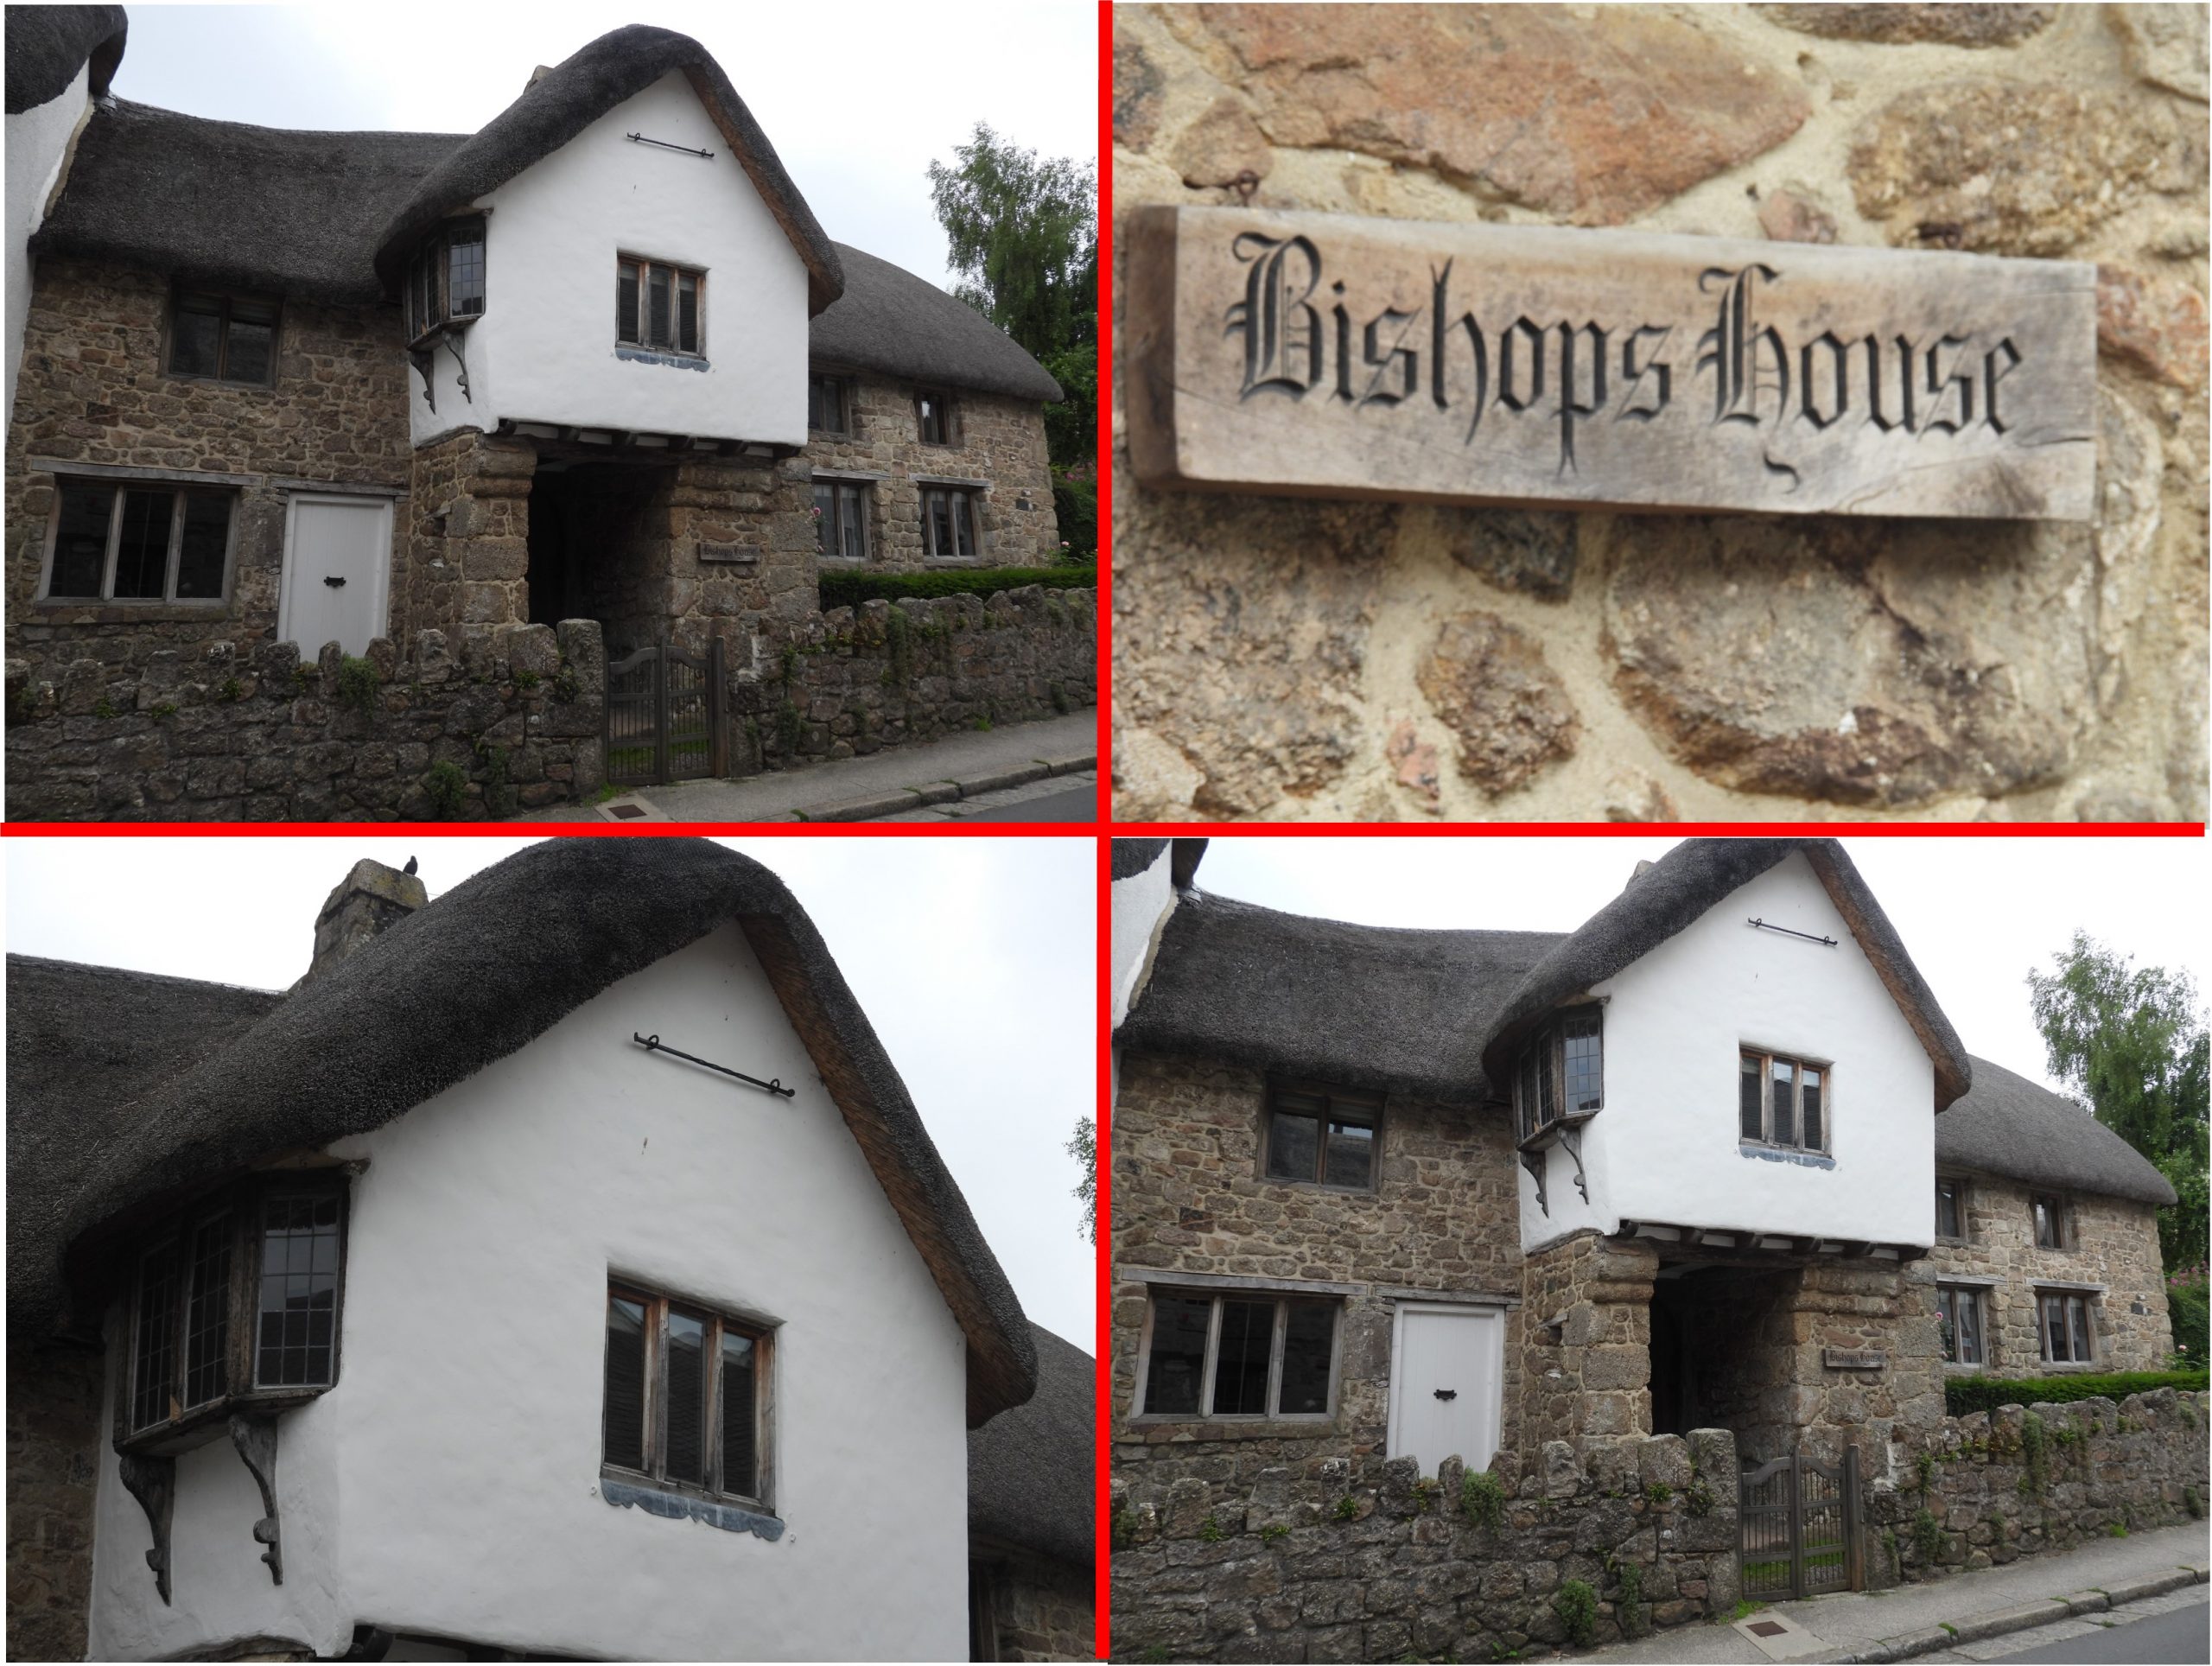 Chagford 48 - Bishops House